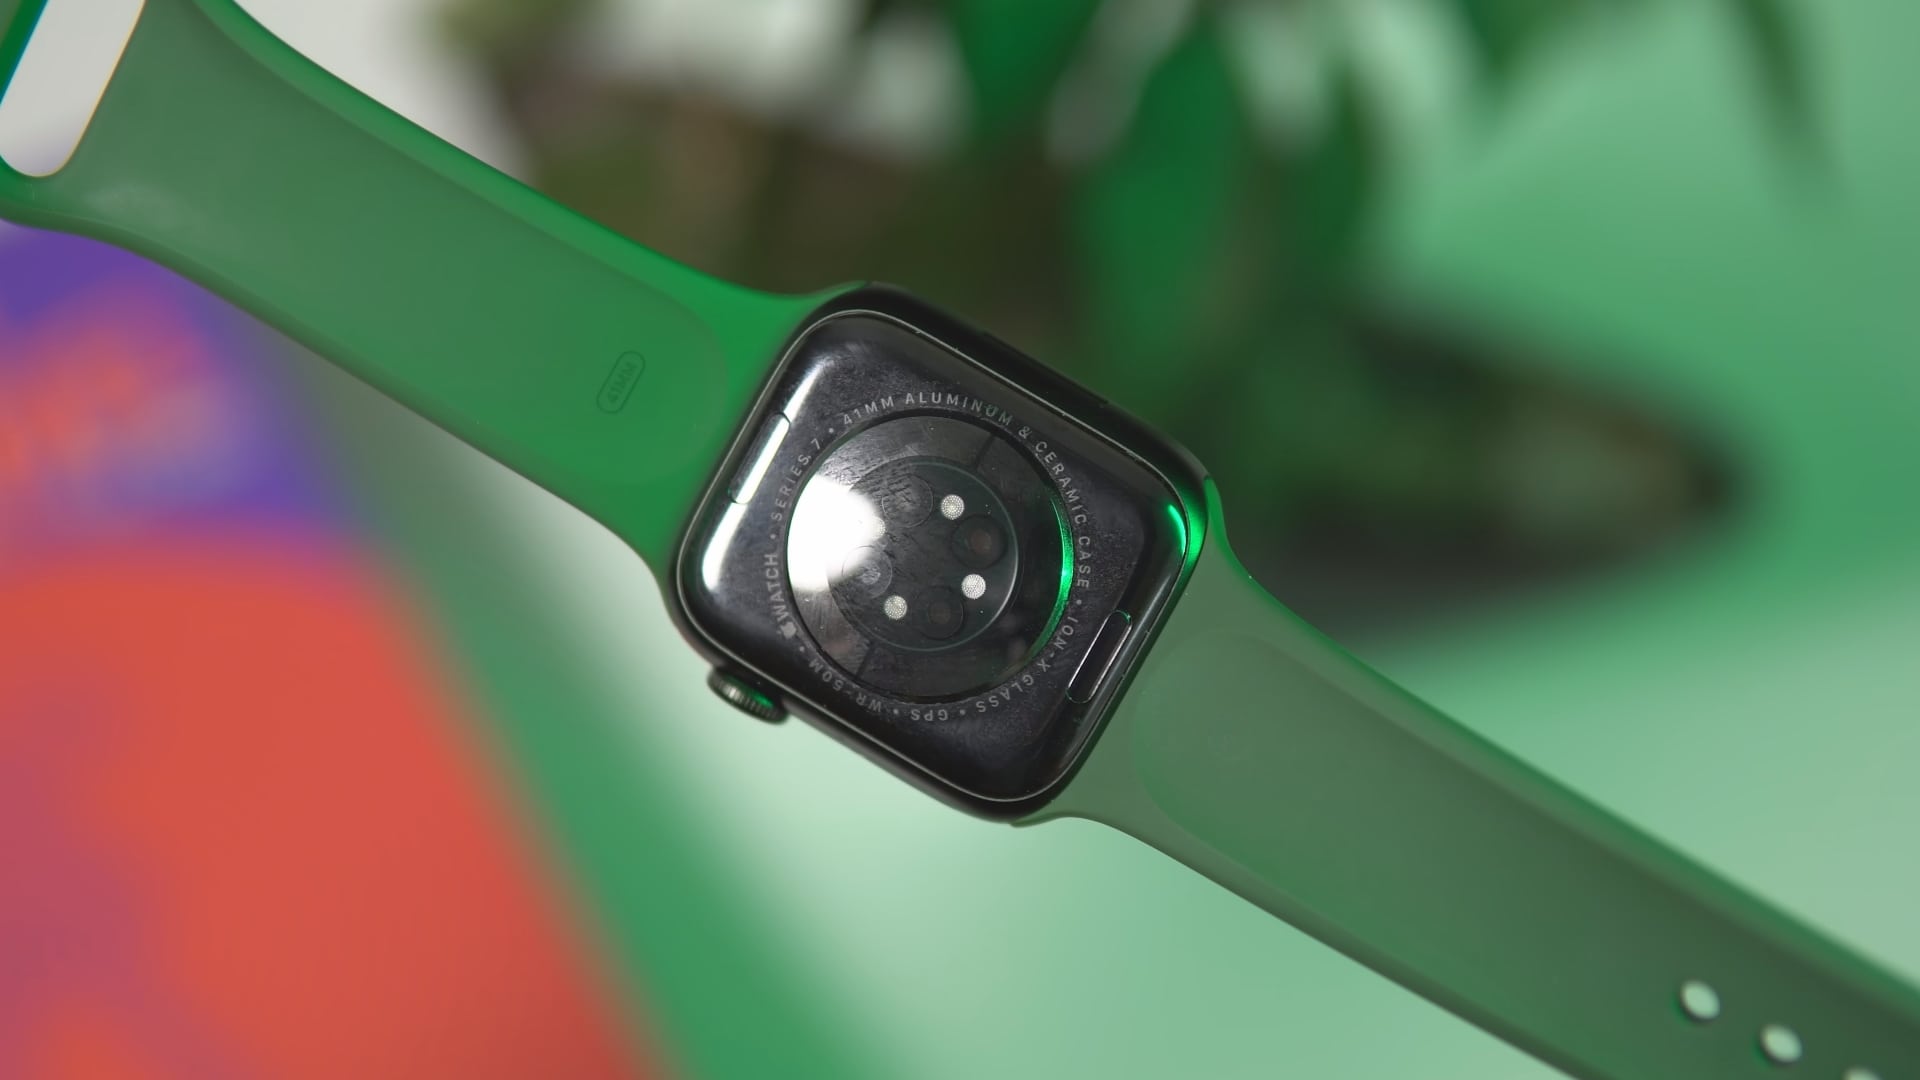 Acessórios - Apple Watch Series 9 45mm GPS selado